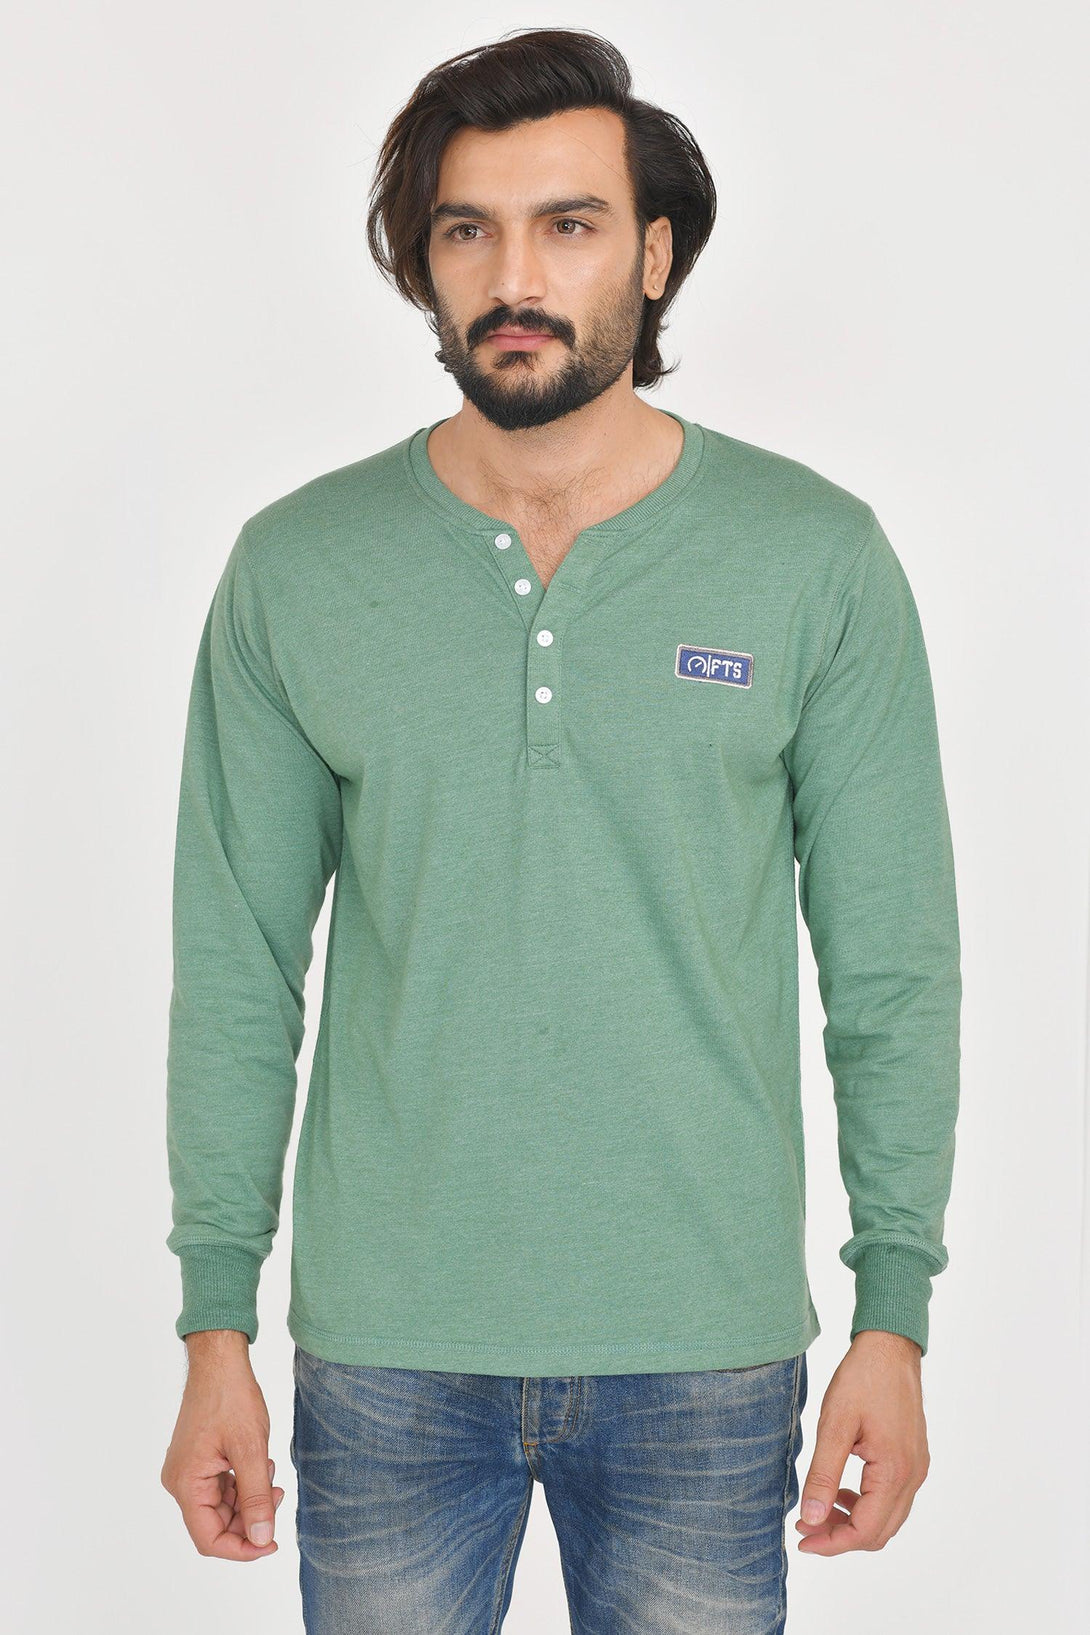 HENLEY Full Sleeve Shirts | HUNTER GREEN & SLATE Pack of 2 - FTS